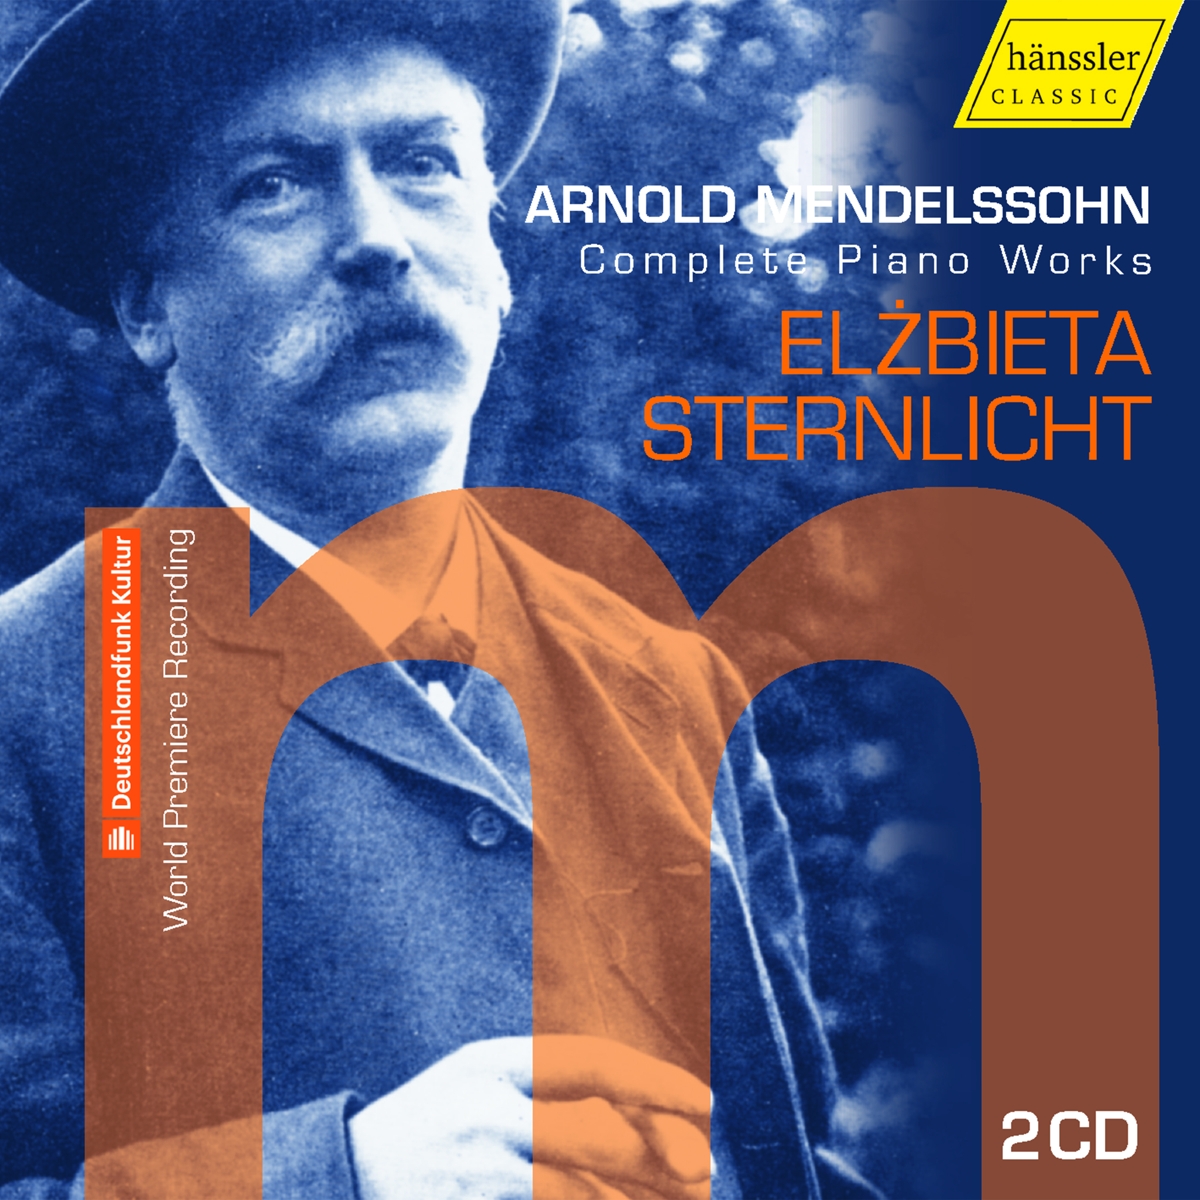 Arnold Mendelssohn: Complete Piano Works